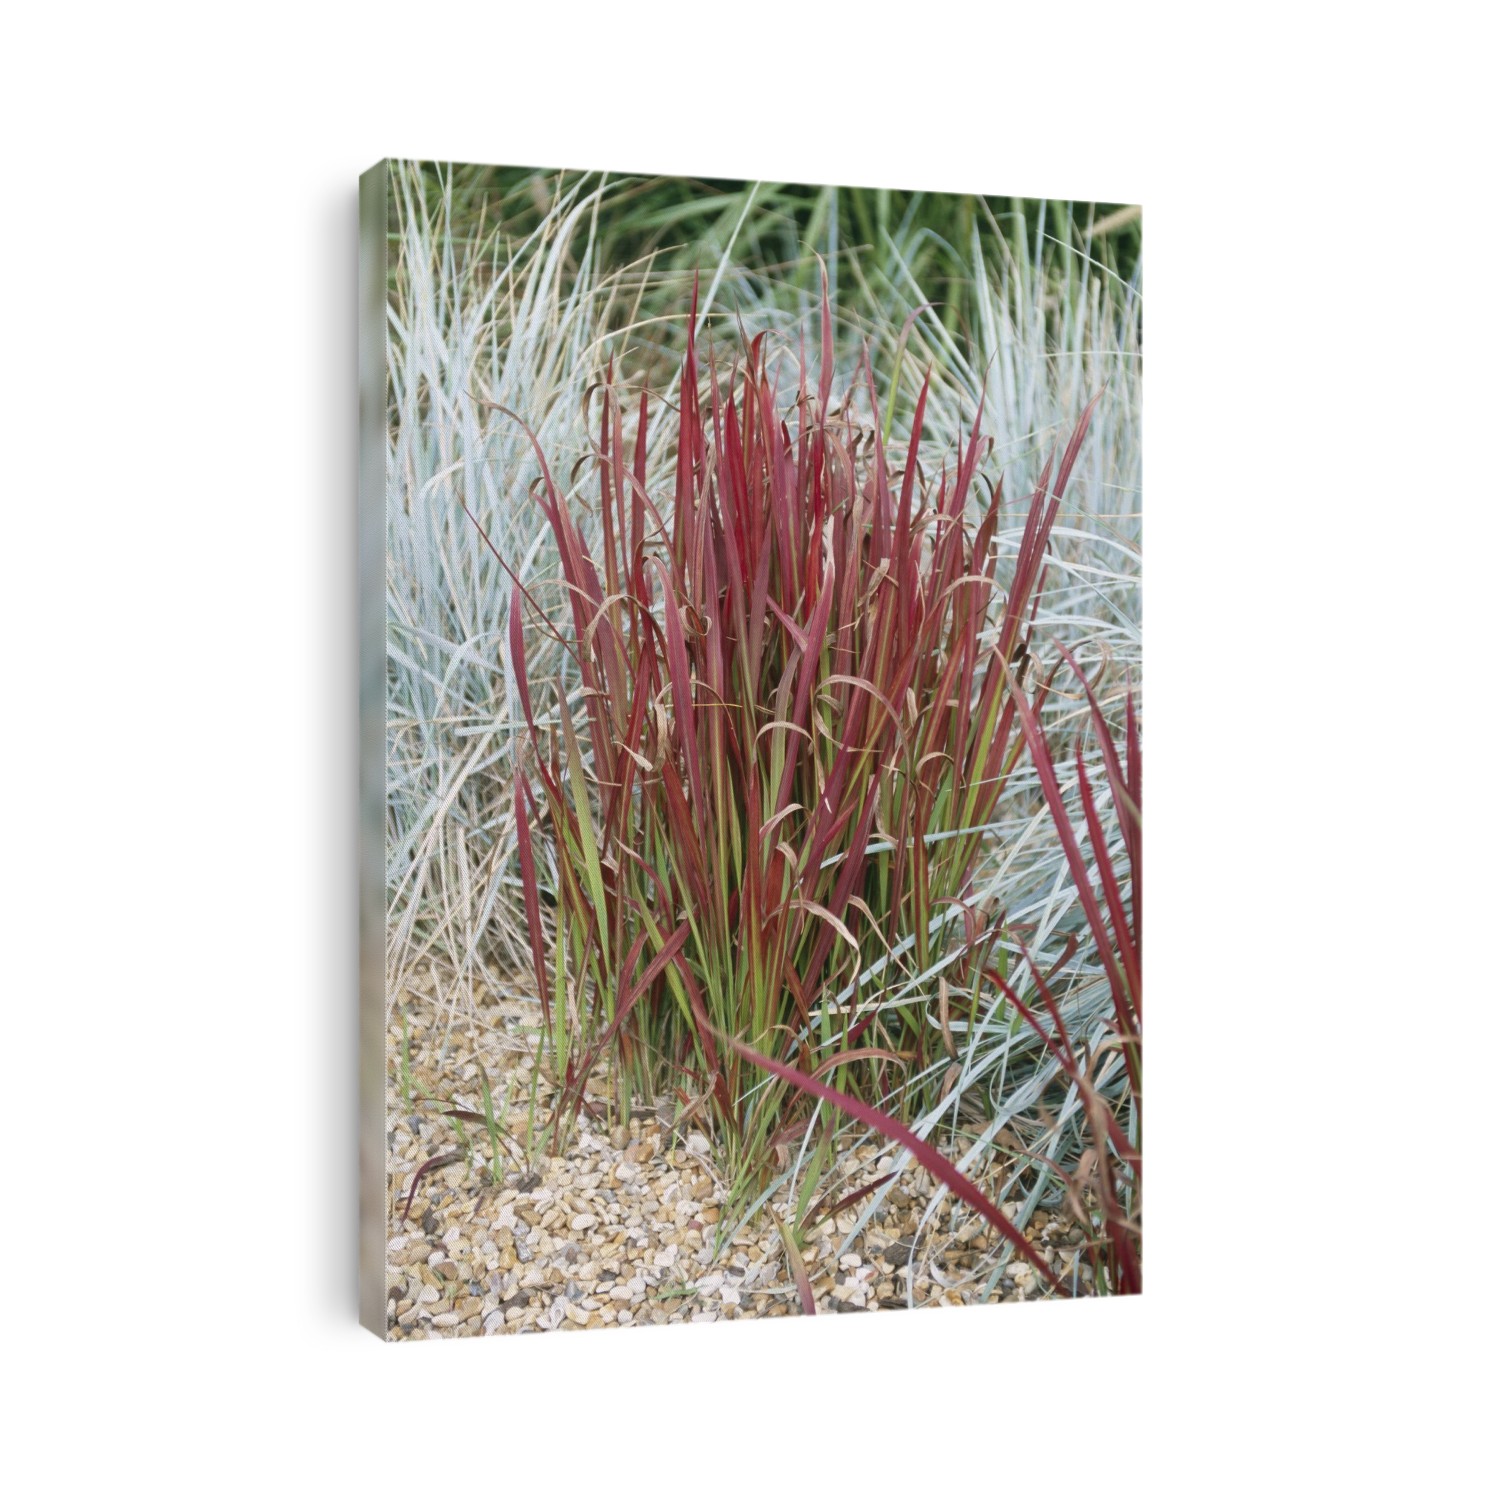 Japanese blood grass (Imperata cylindrica 'Rubra').